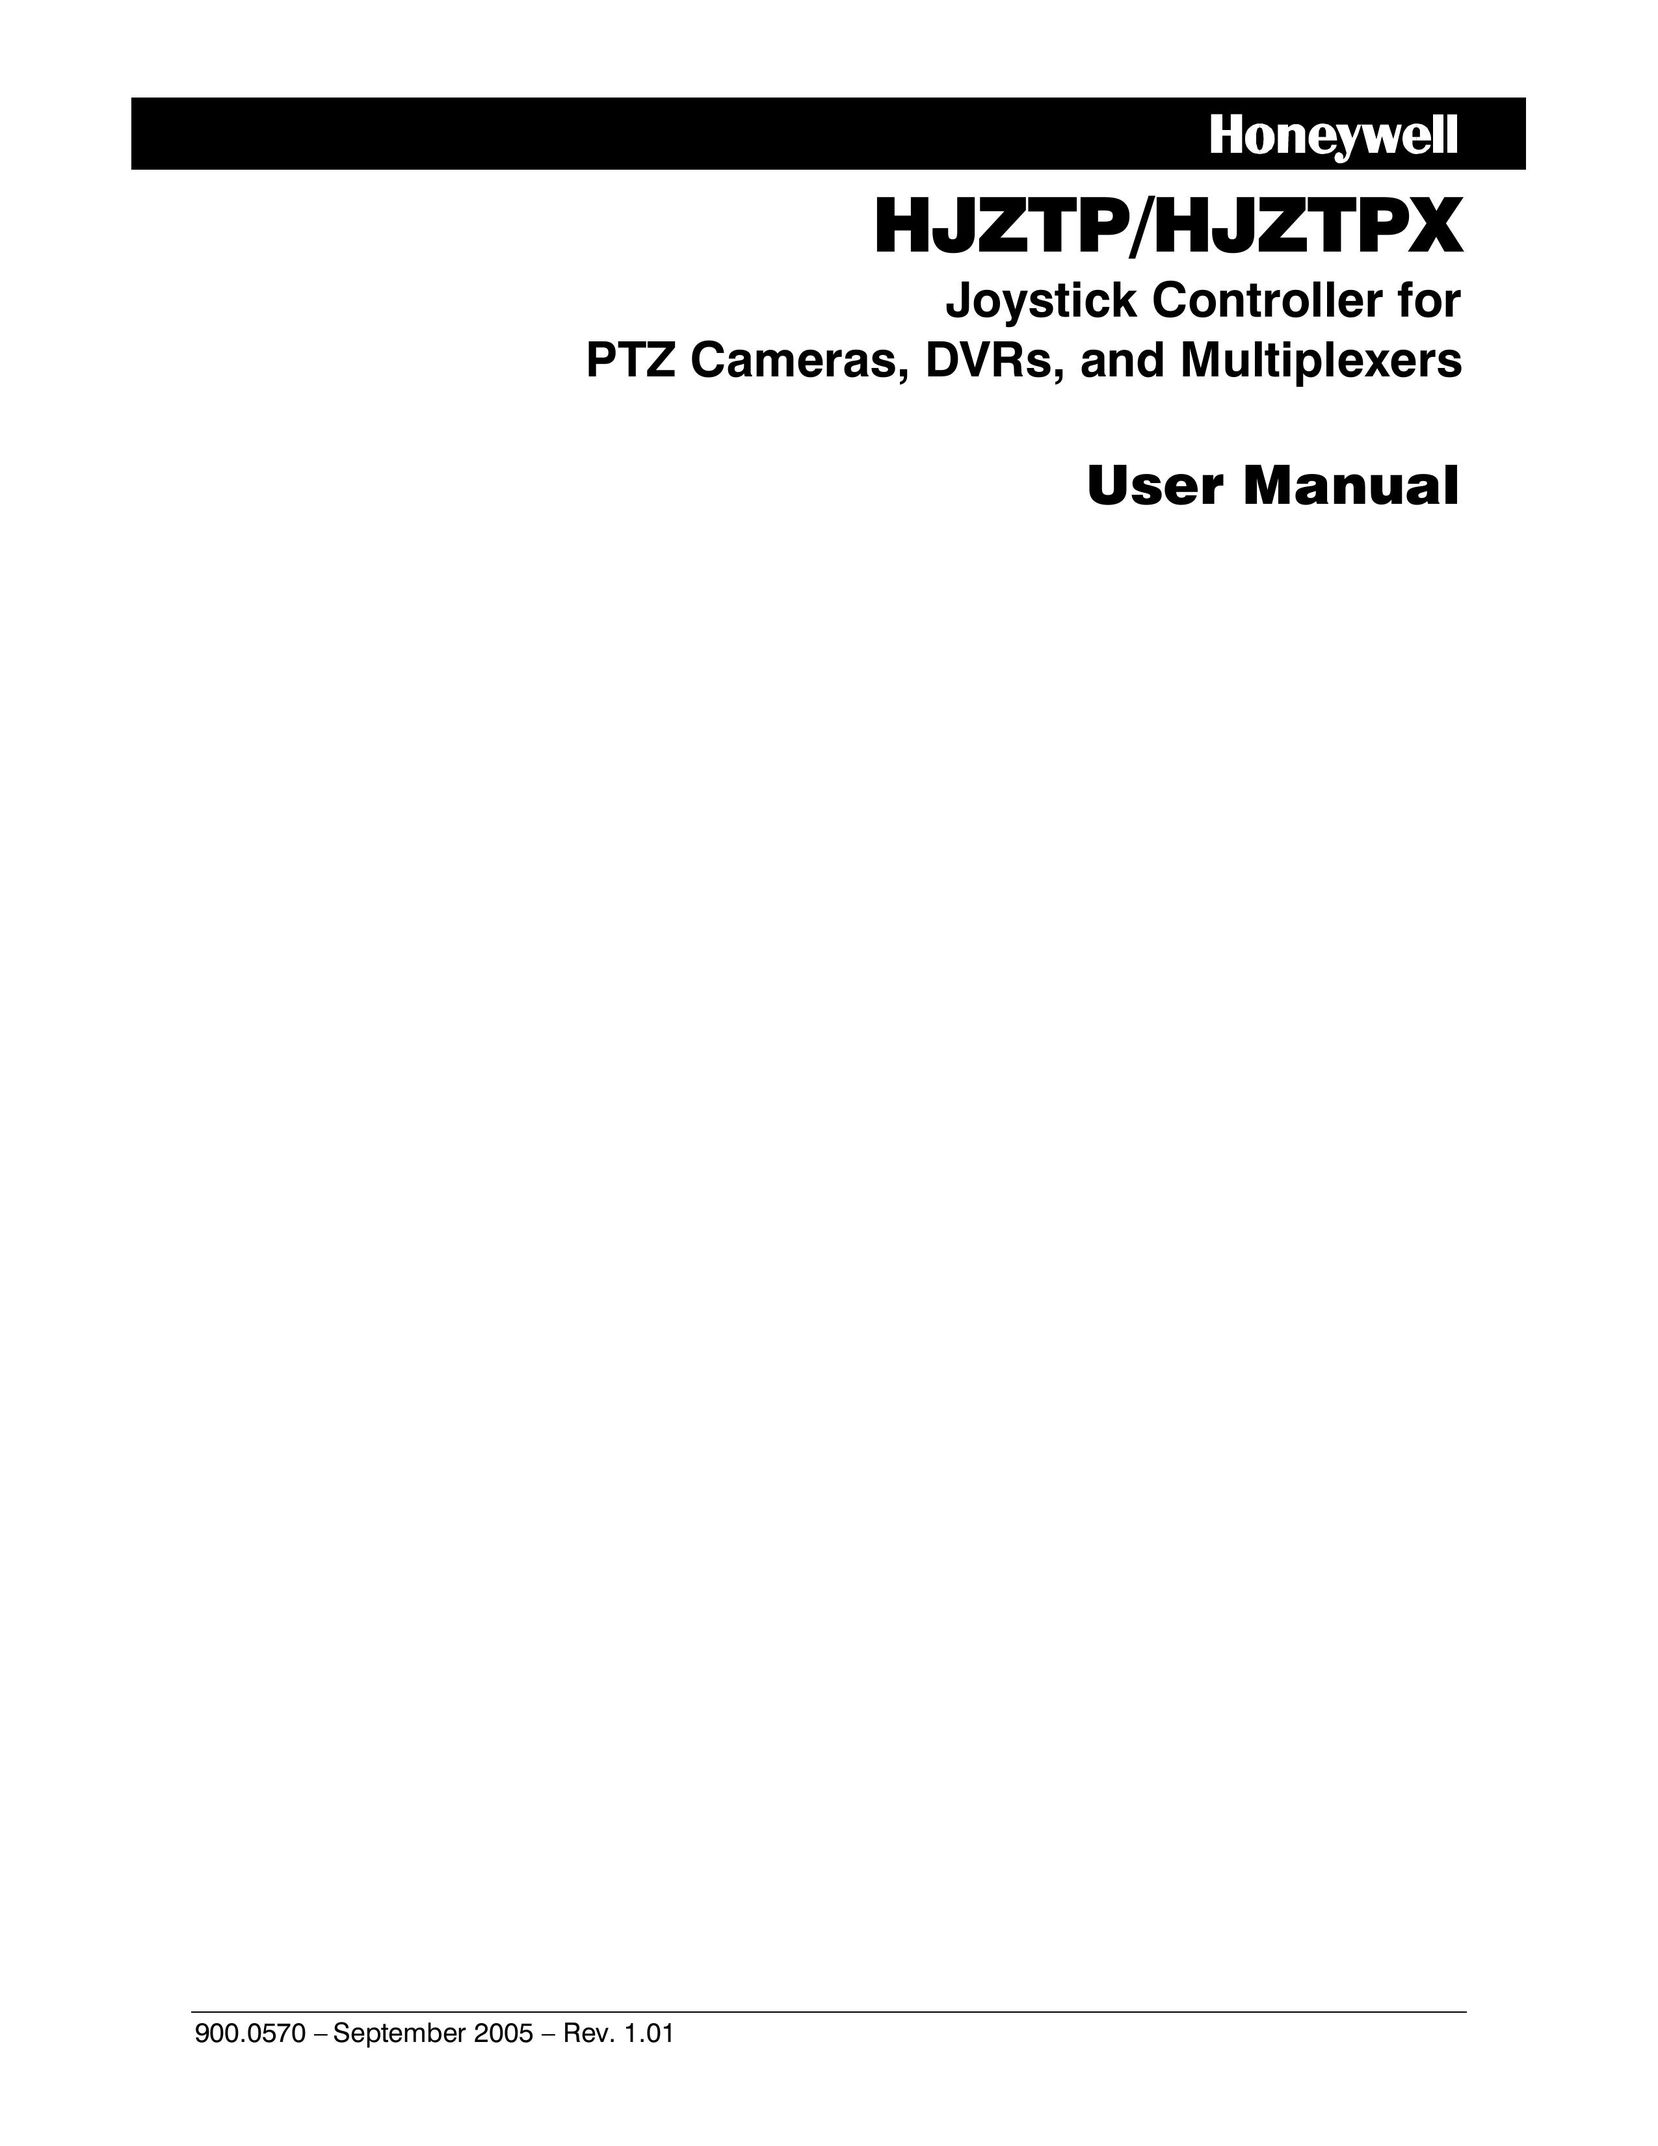 Honeywell HJZTPX Video Game Controller User Manual